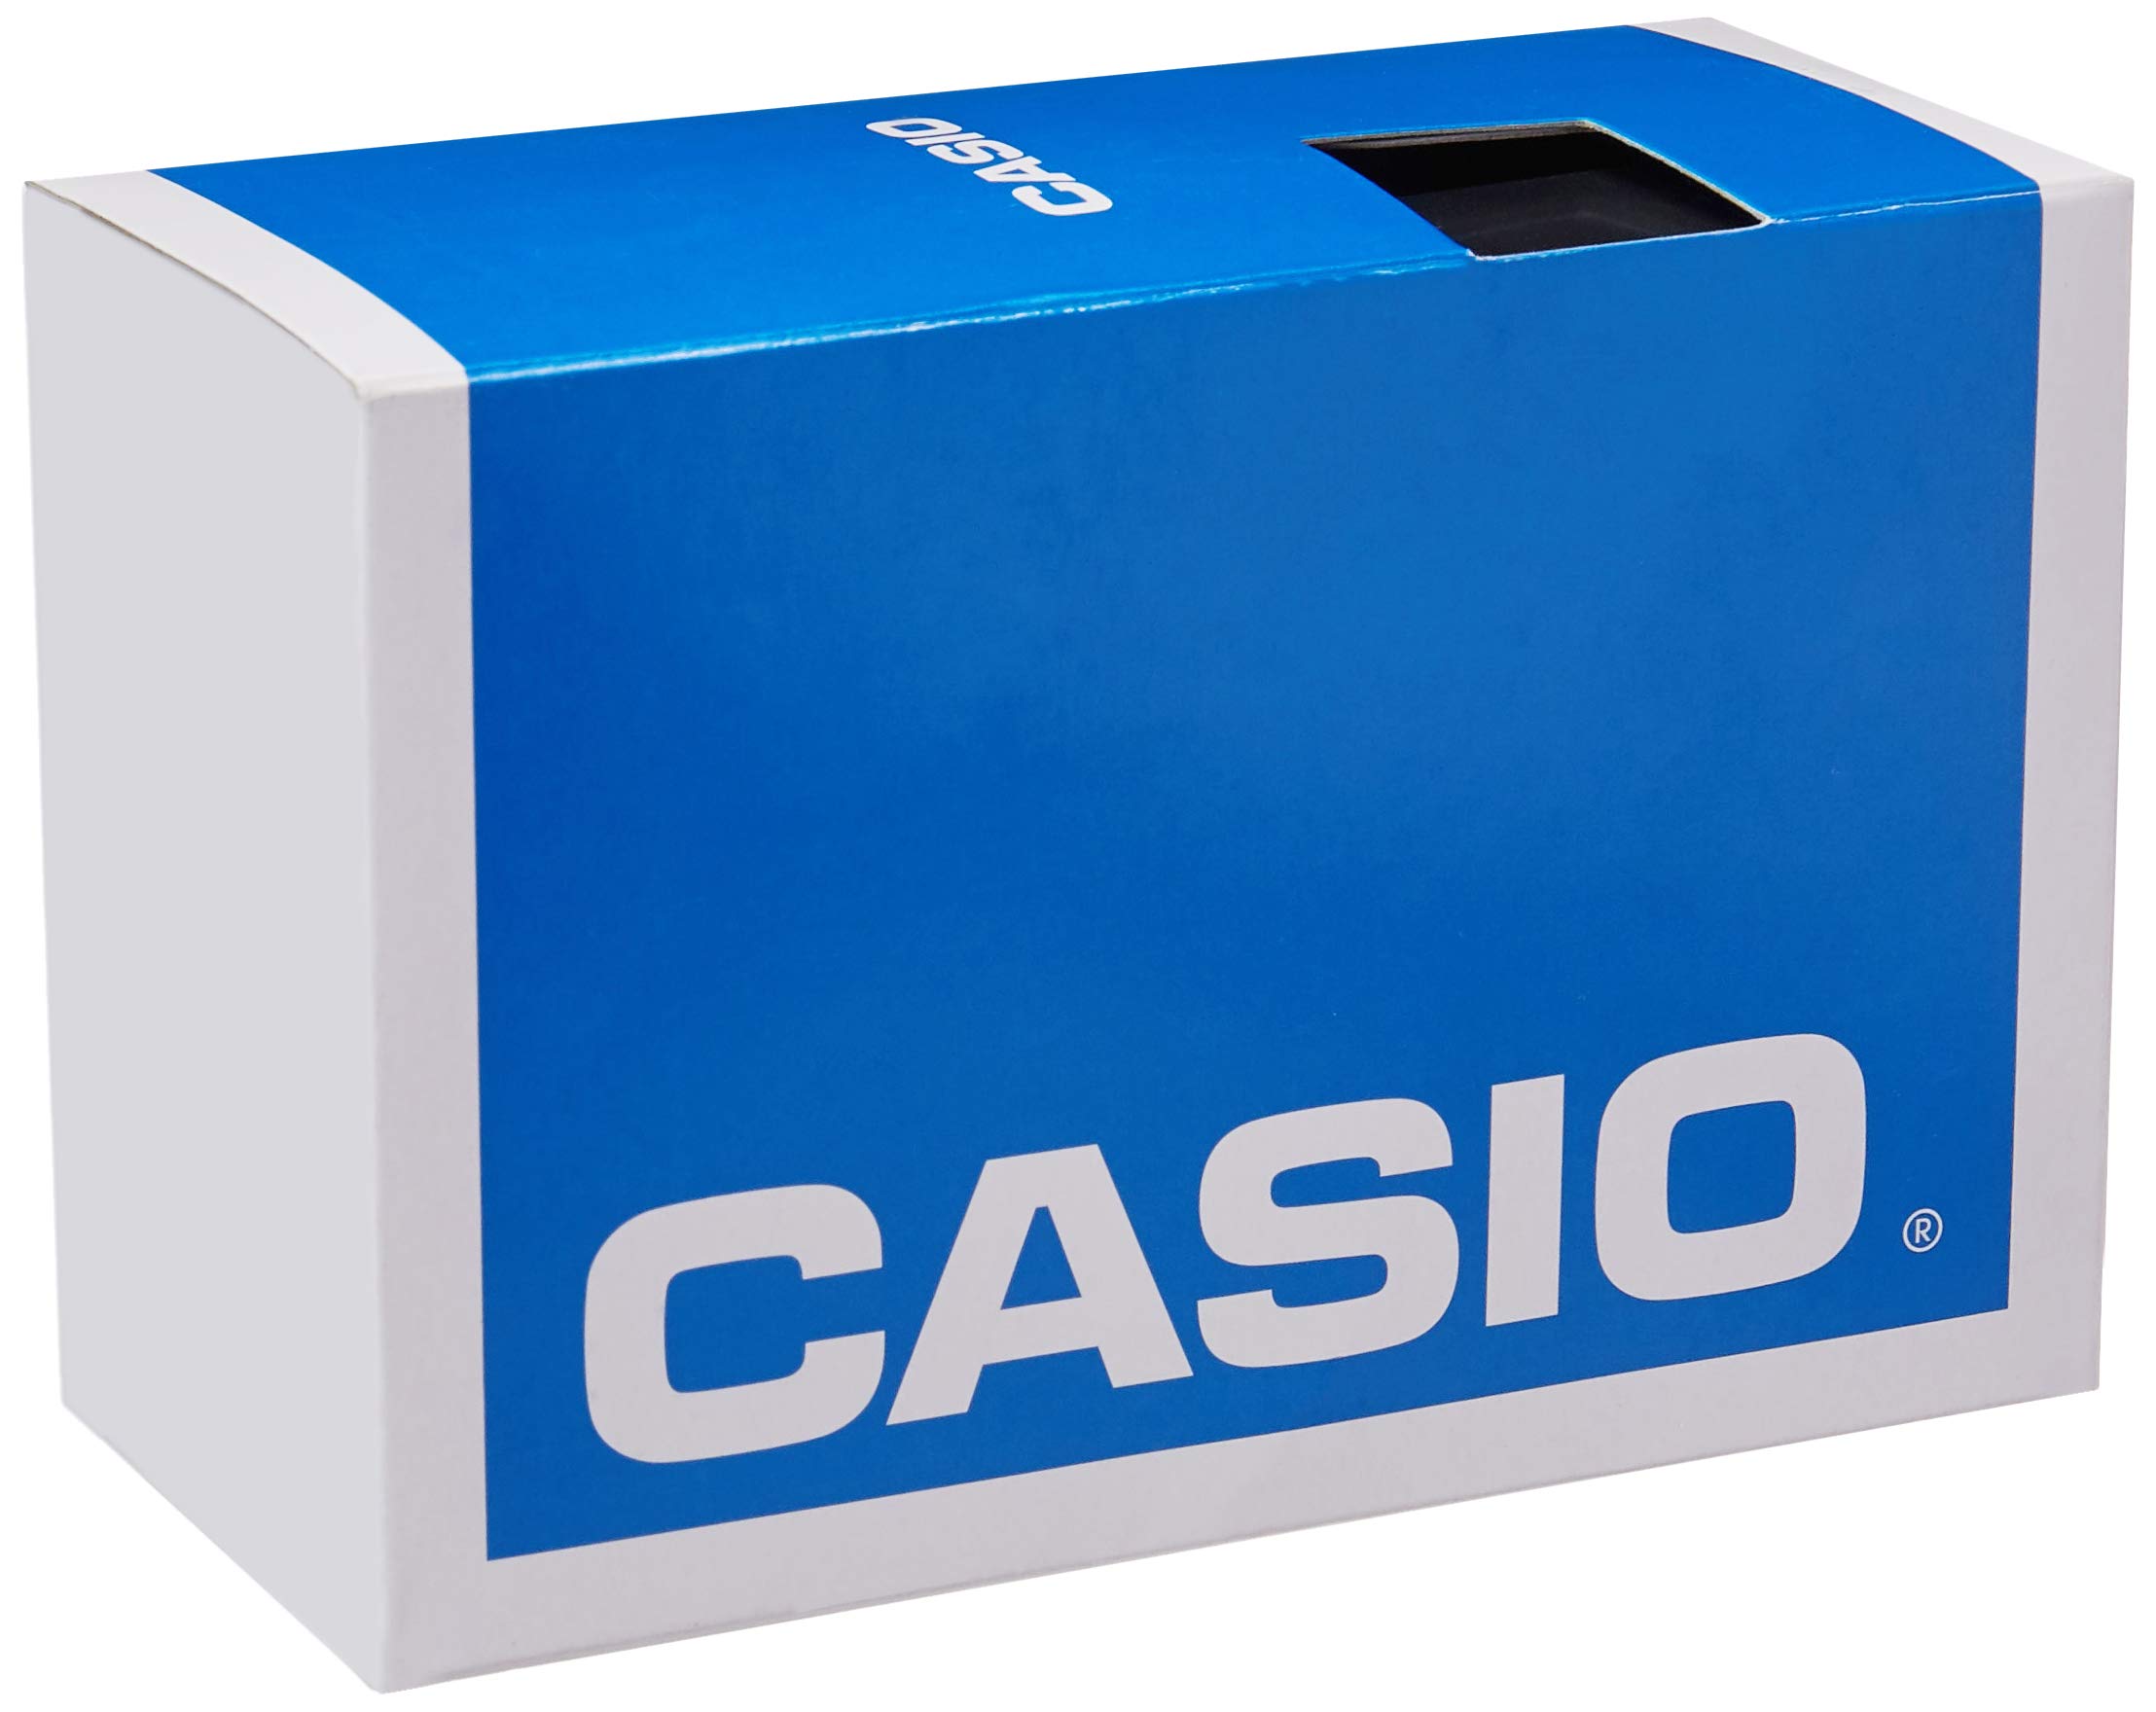 Casio Men's WS210H-1AVCF Tough Solar-Powered Tide and Moon Digital Sport Wa,tch